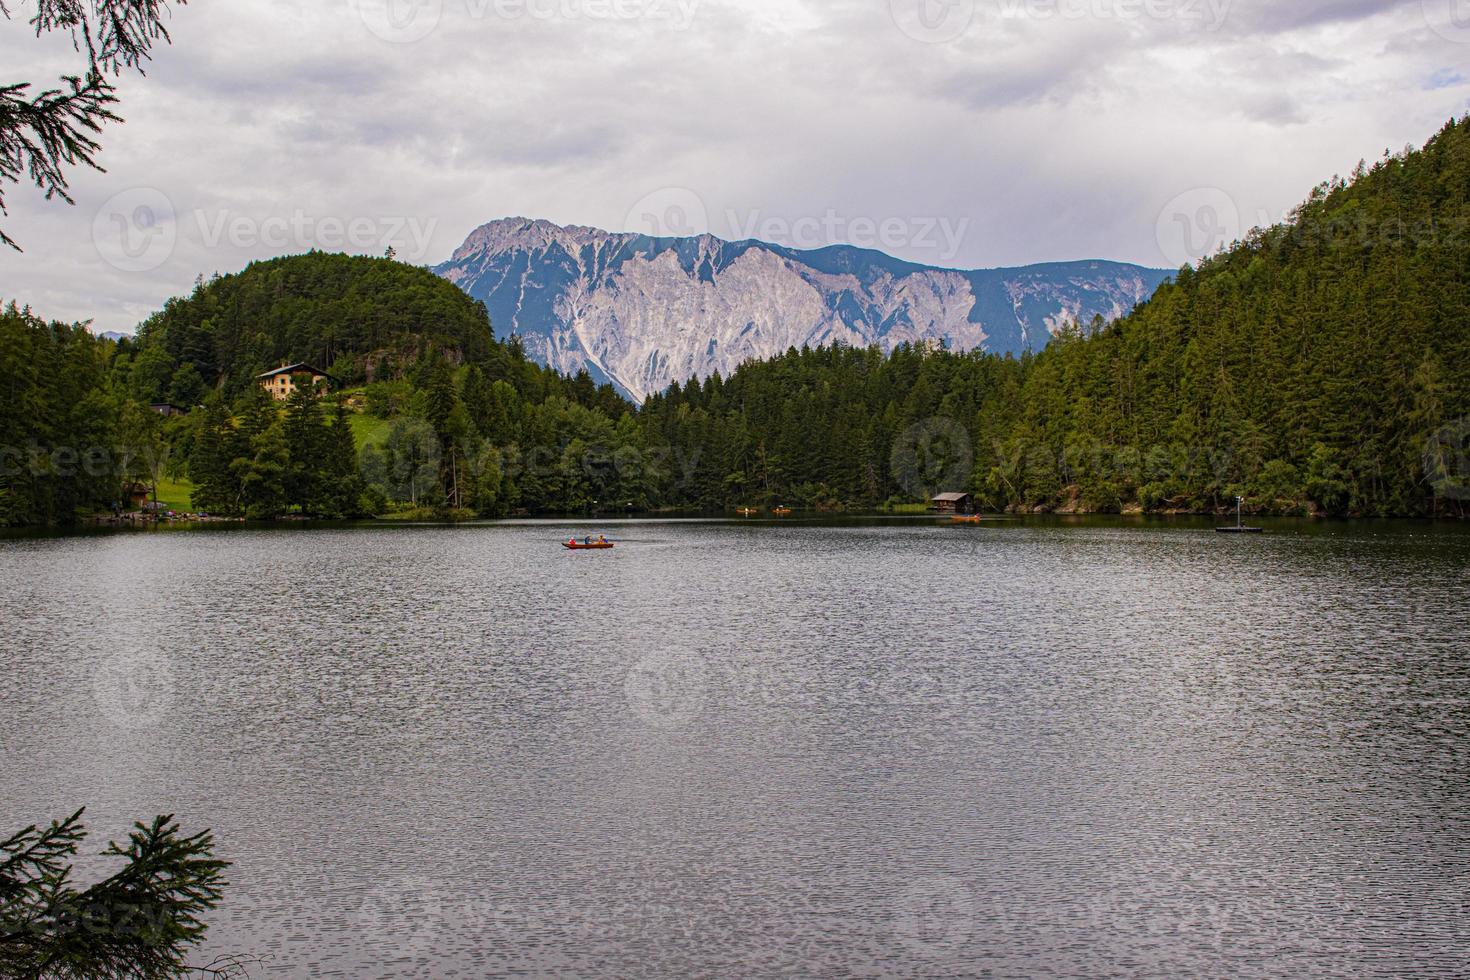 piburgersee i Otztal-dalen i den österrikiska tyrolen foto